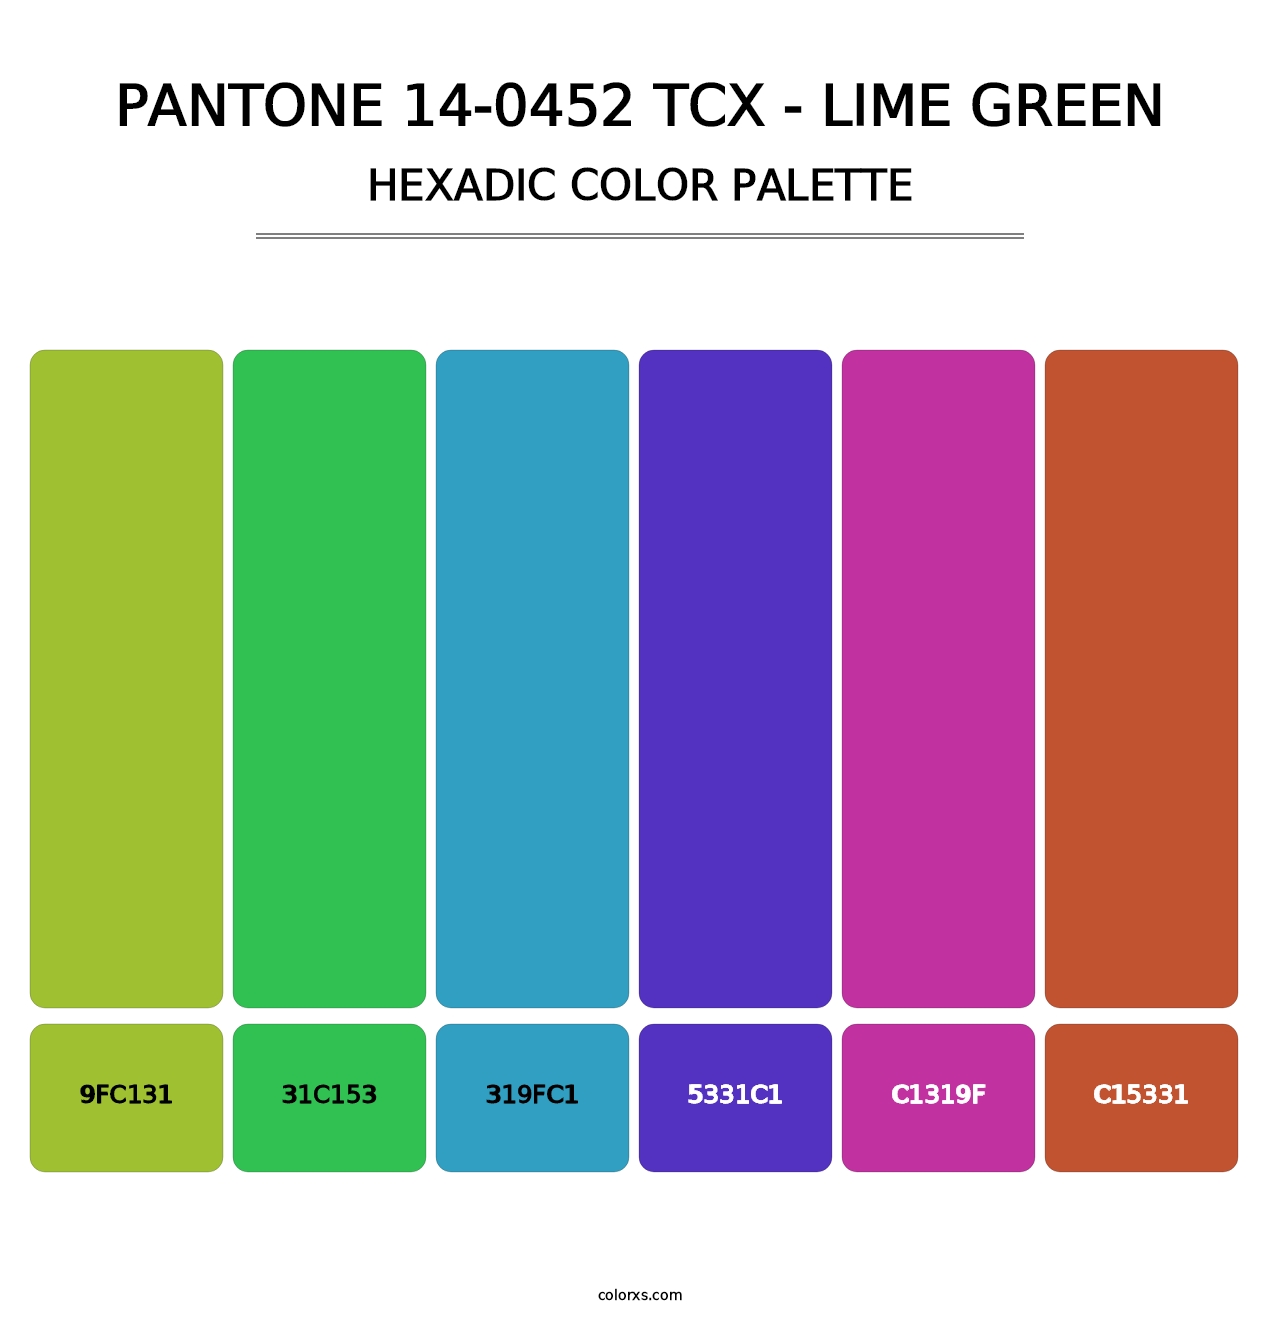 PANTONE 14-0452 TCX - Lime Green - Hexadic Color Palette